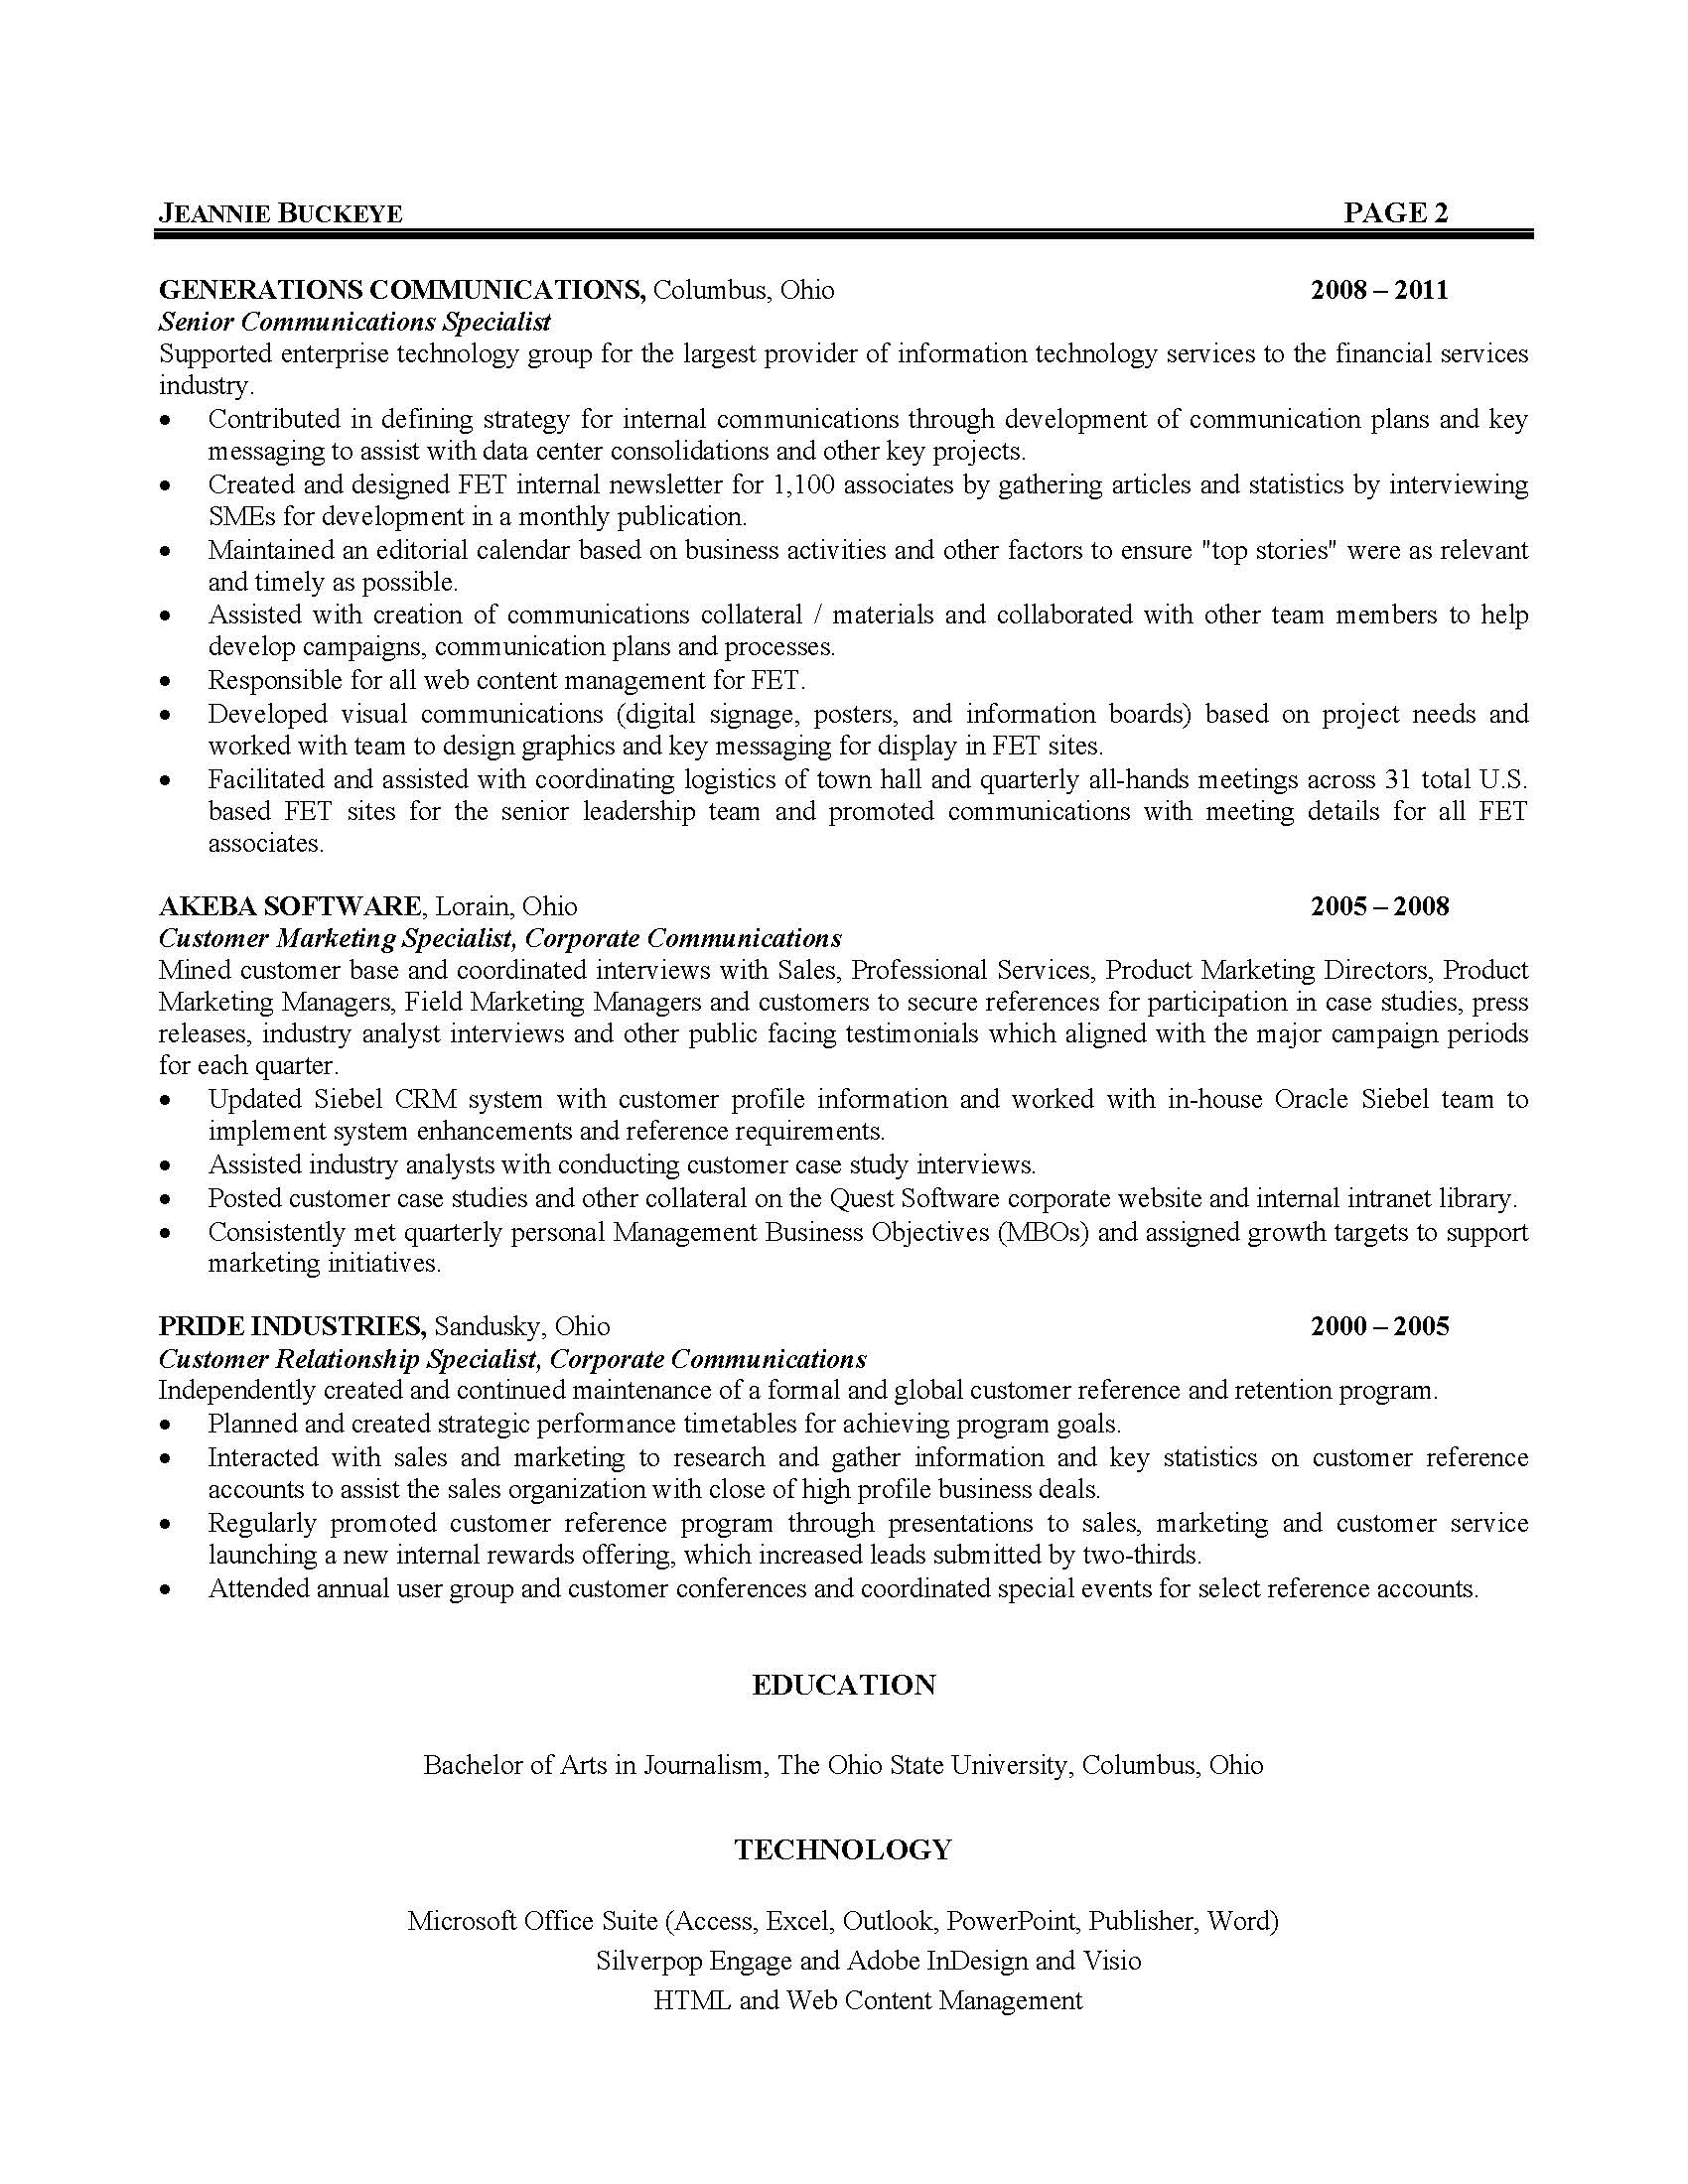 ohio-university-resume-template-invitation-template-ideas